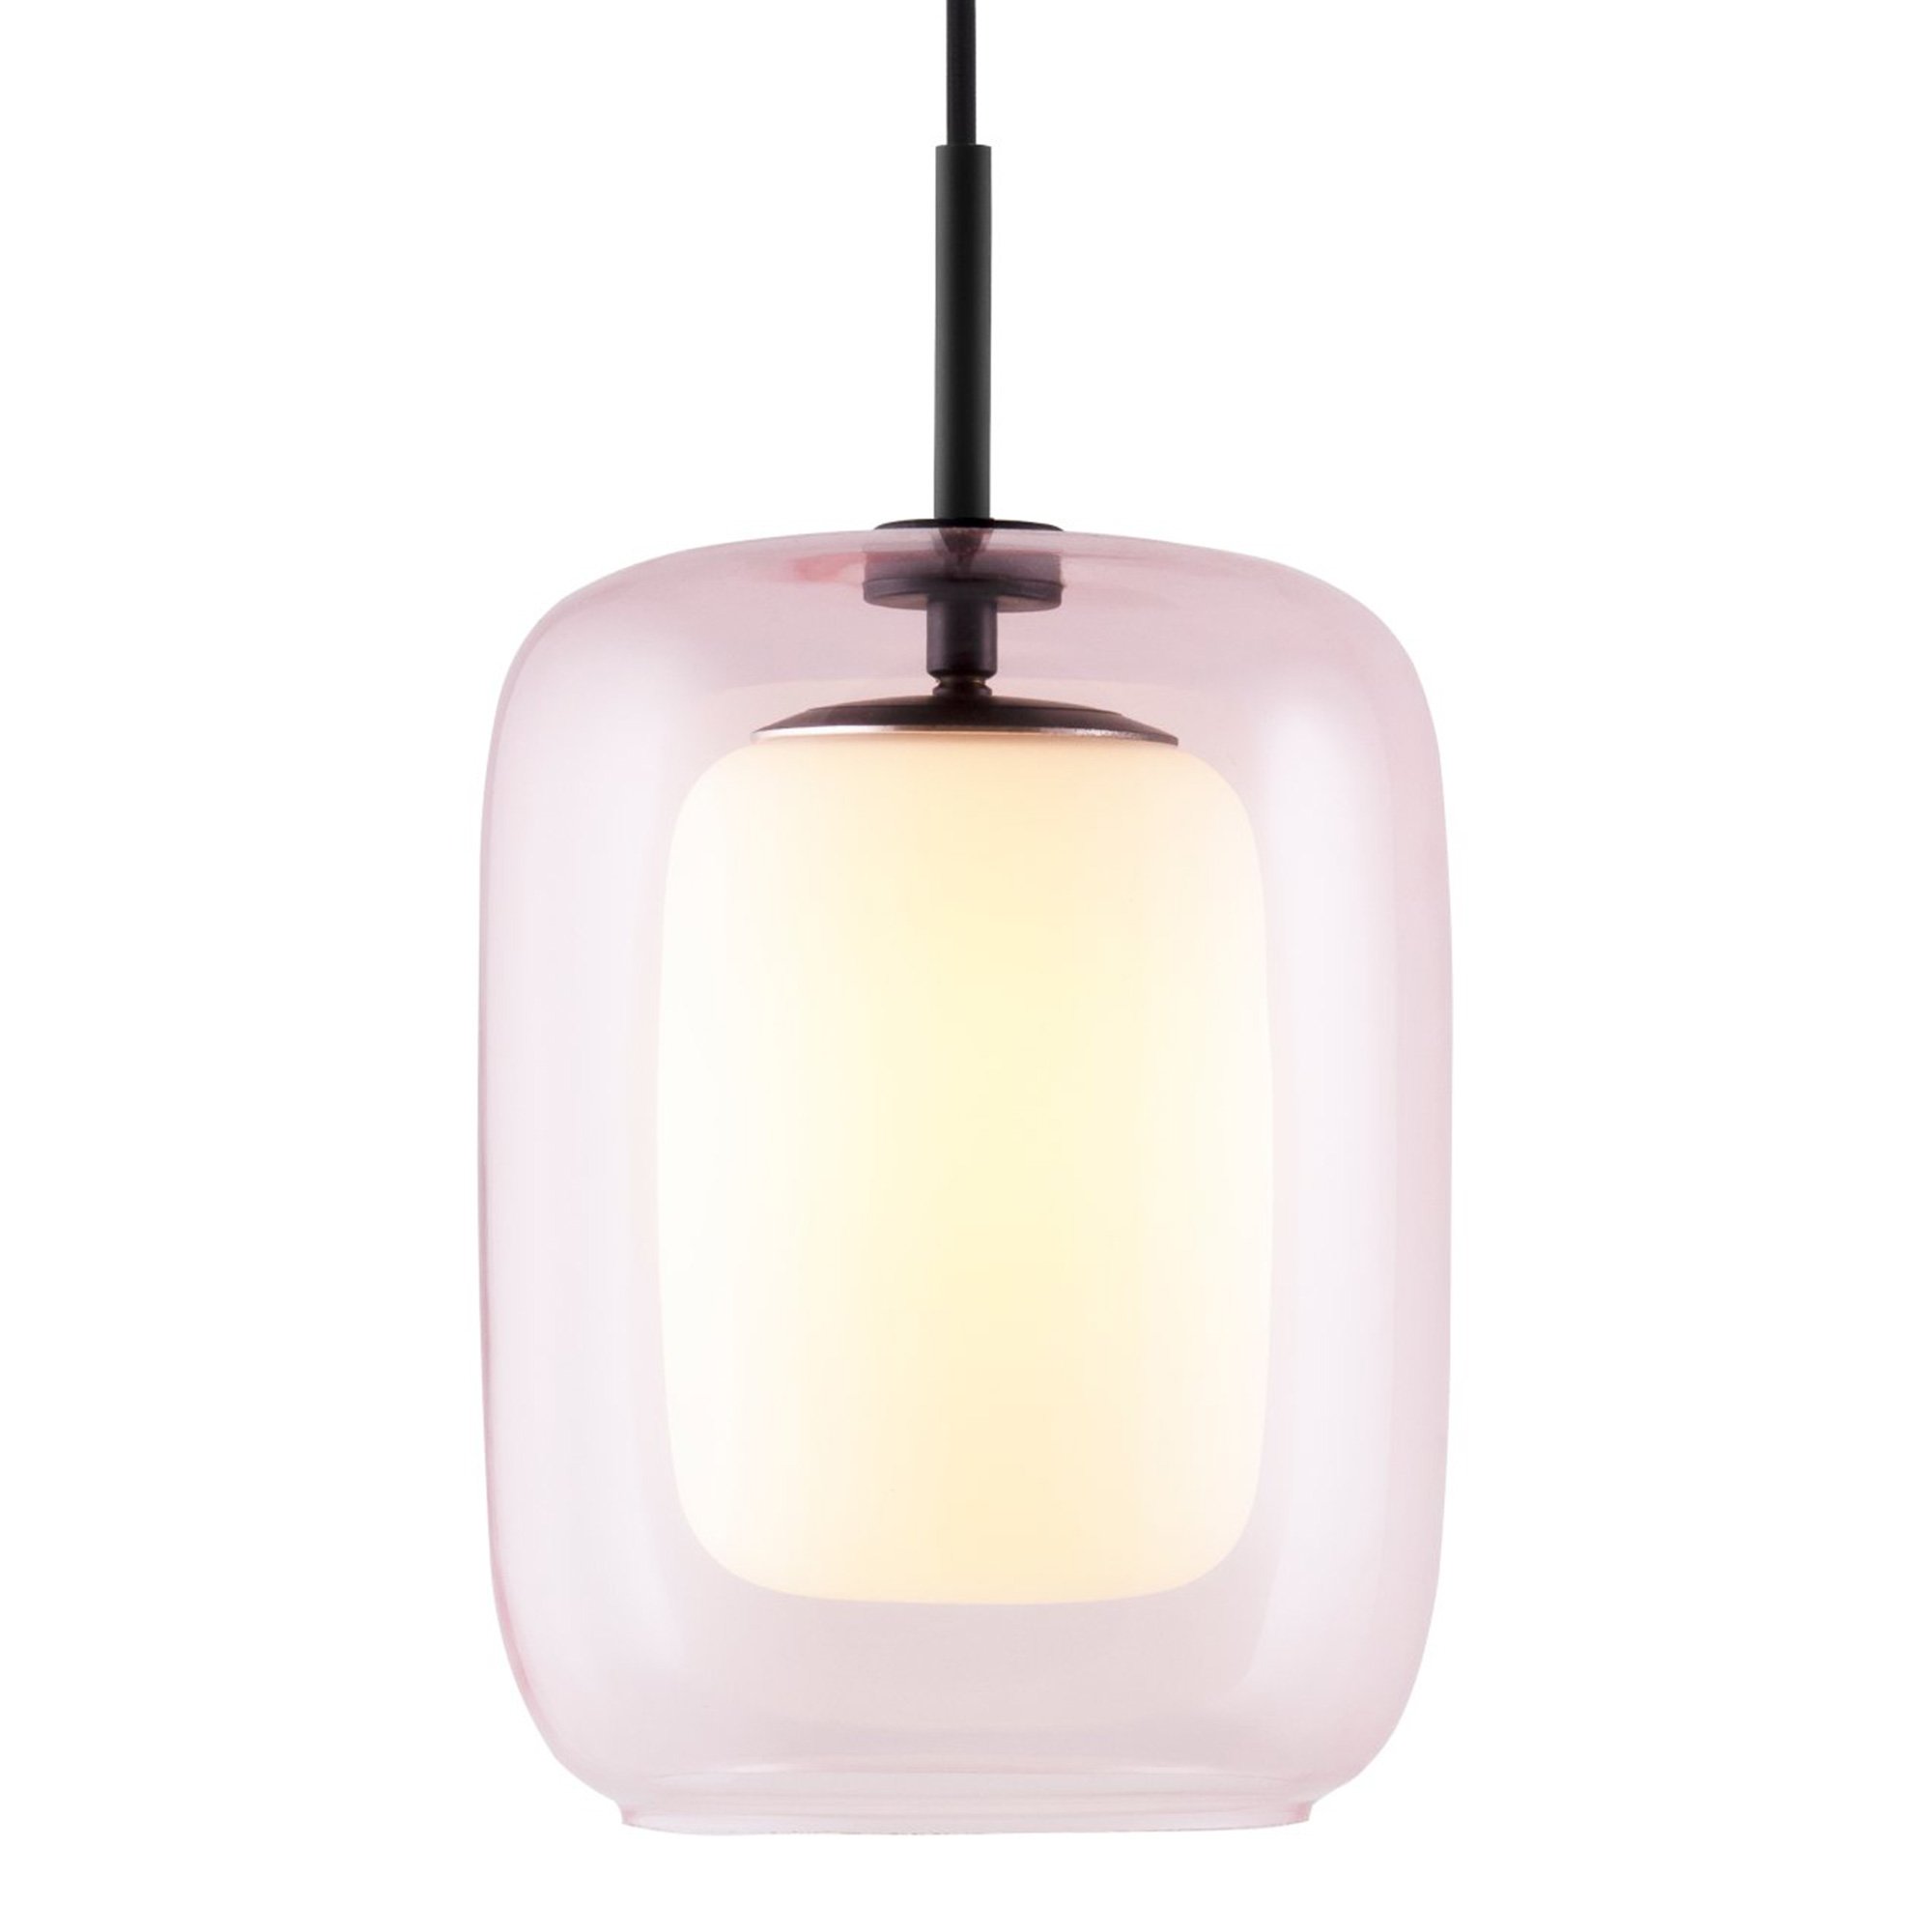 Globen Lighting Cuboza loftslampe, 20 cm, fersken/hvid